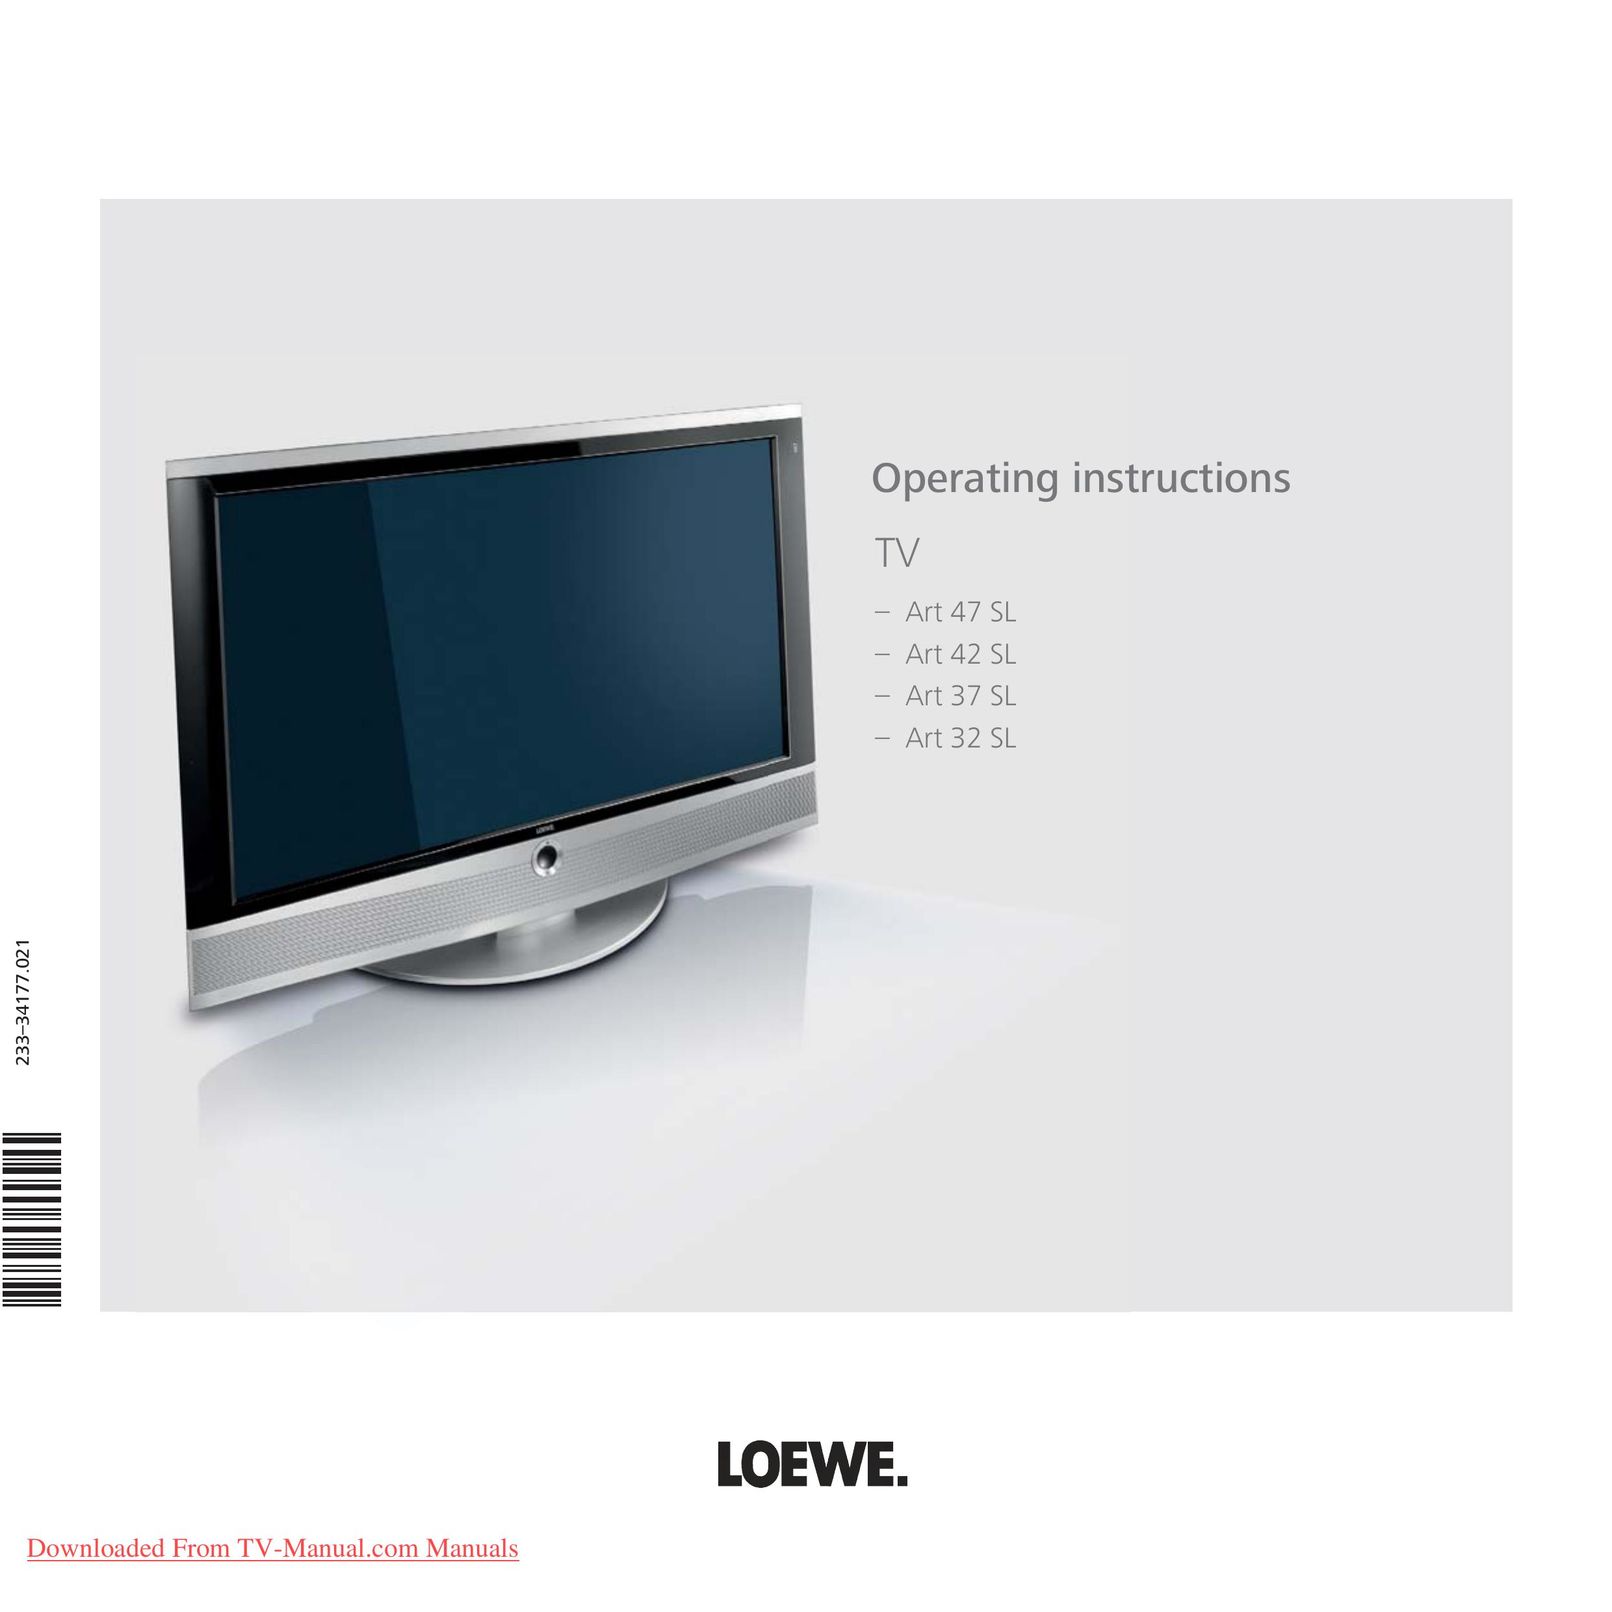 Loewe Art 32 SL CRT Television User Manual